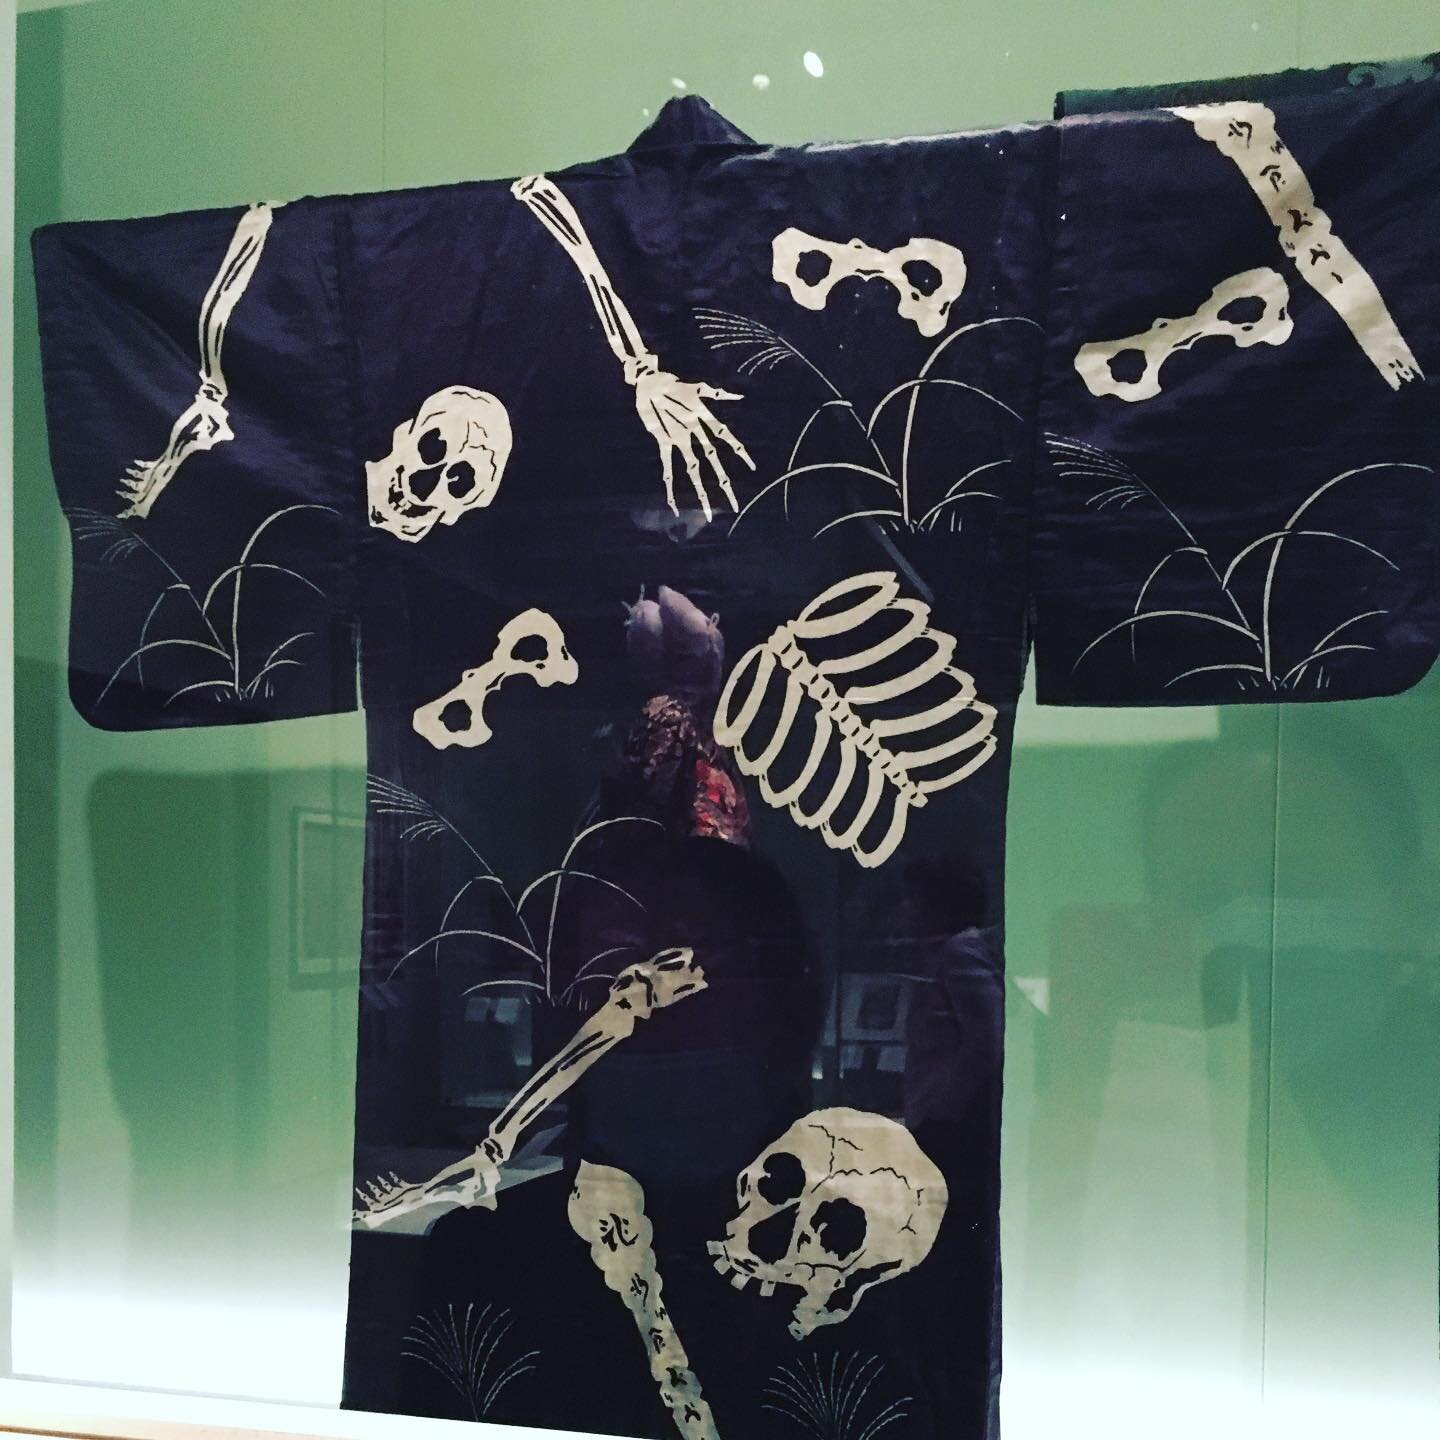 A spooky #Halloween #kimono from the recent @vamuseum exhibit. #happyhalloween #thisyearsucks #2020iscancelled #lifestyle without a life.